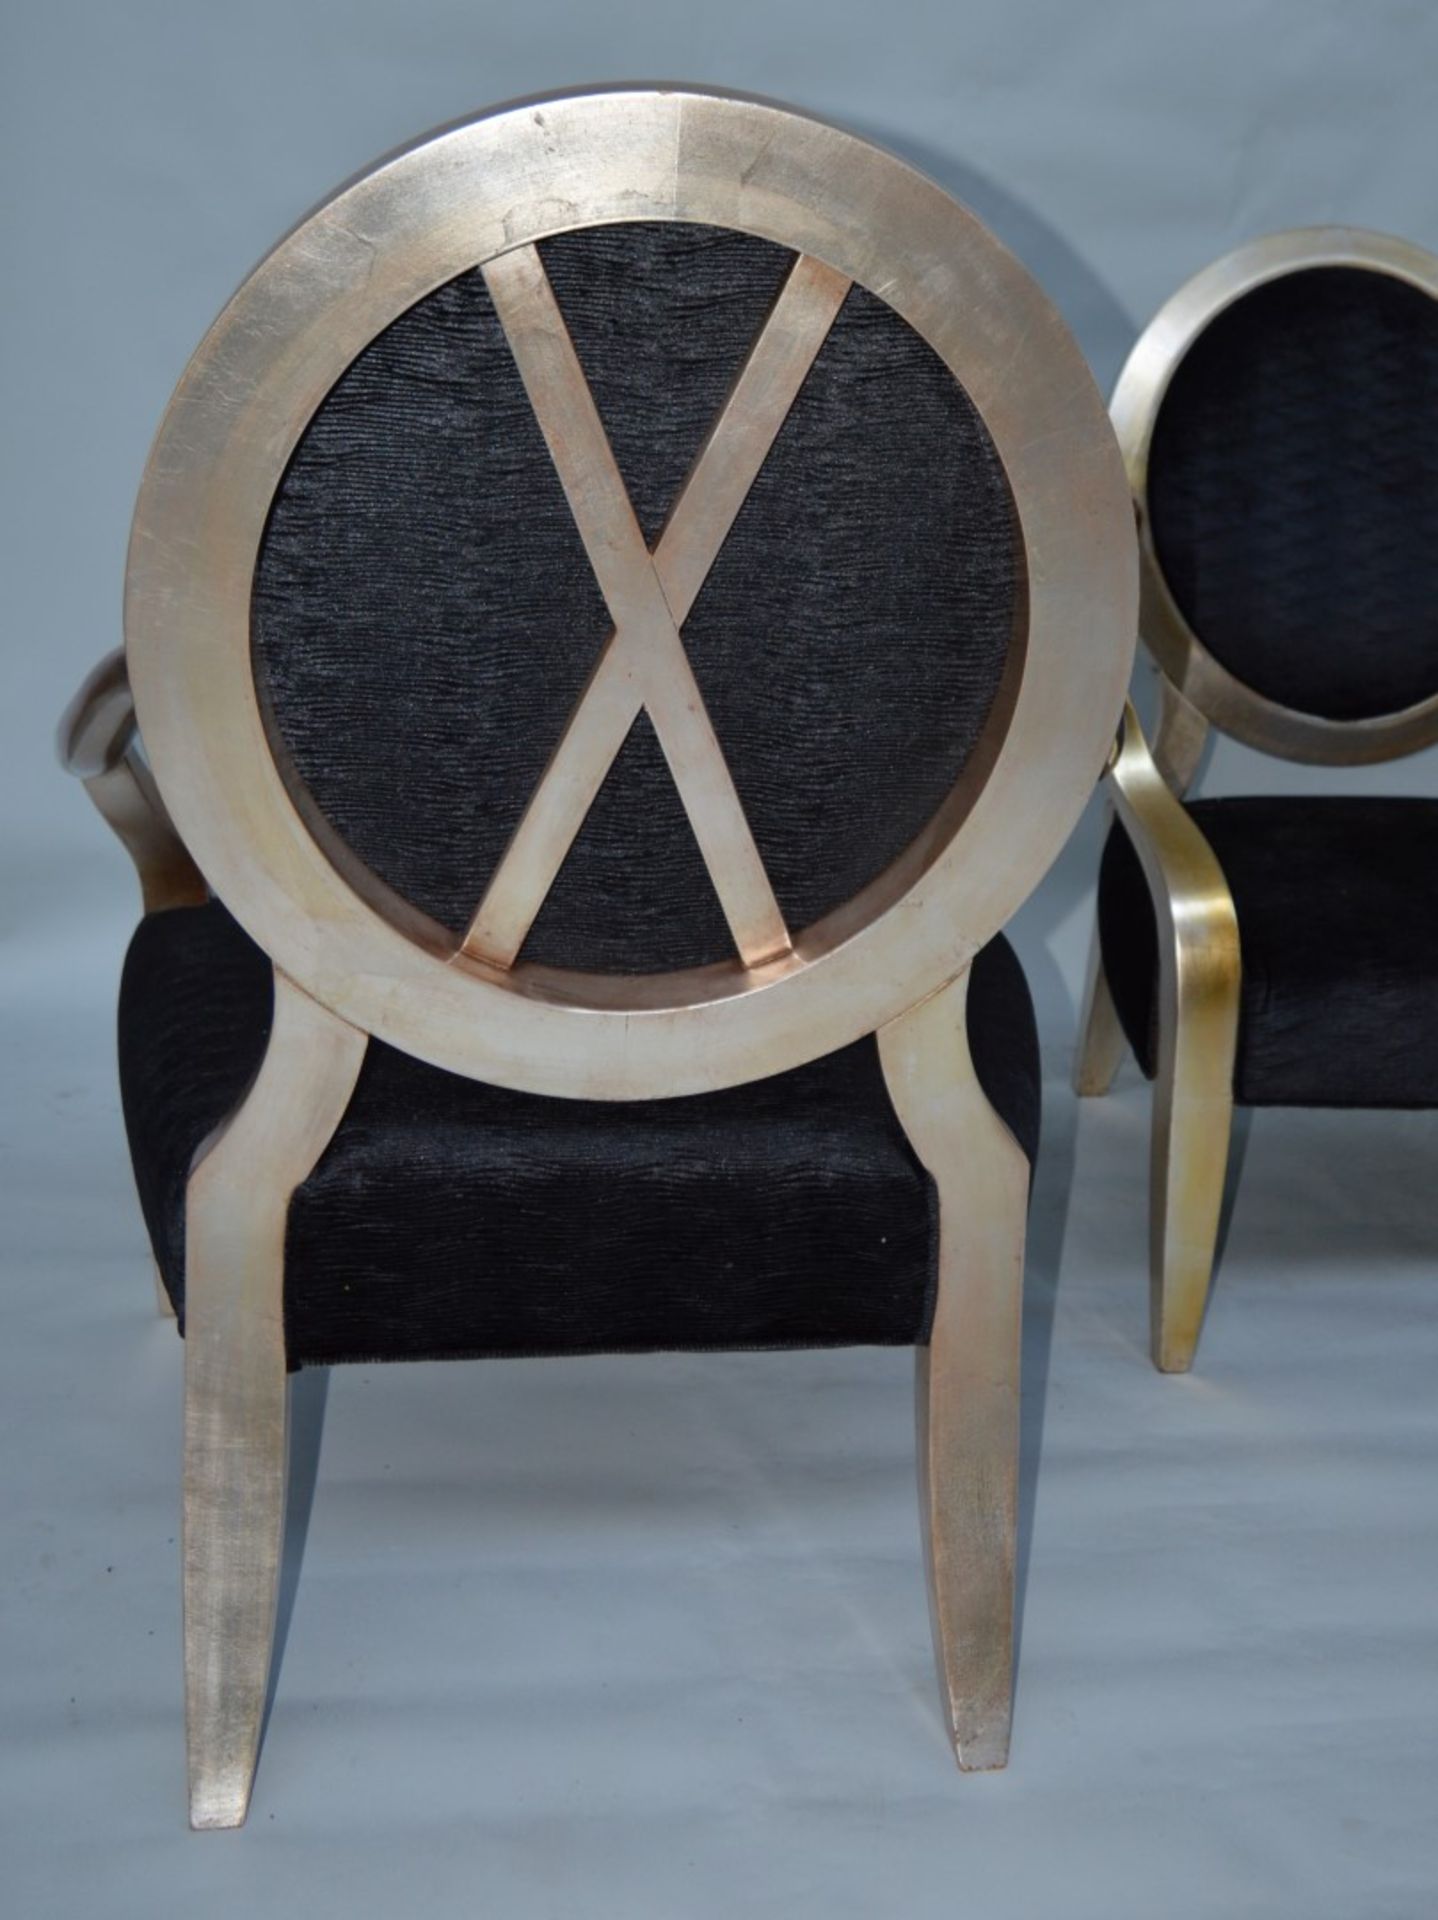 2 x Duresta Nero Chairs - individual Fabric - CL08 - Location Altrincham, WA14 - Image 7 of 7